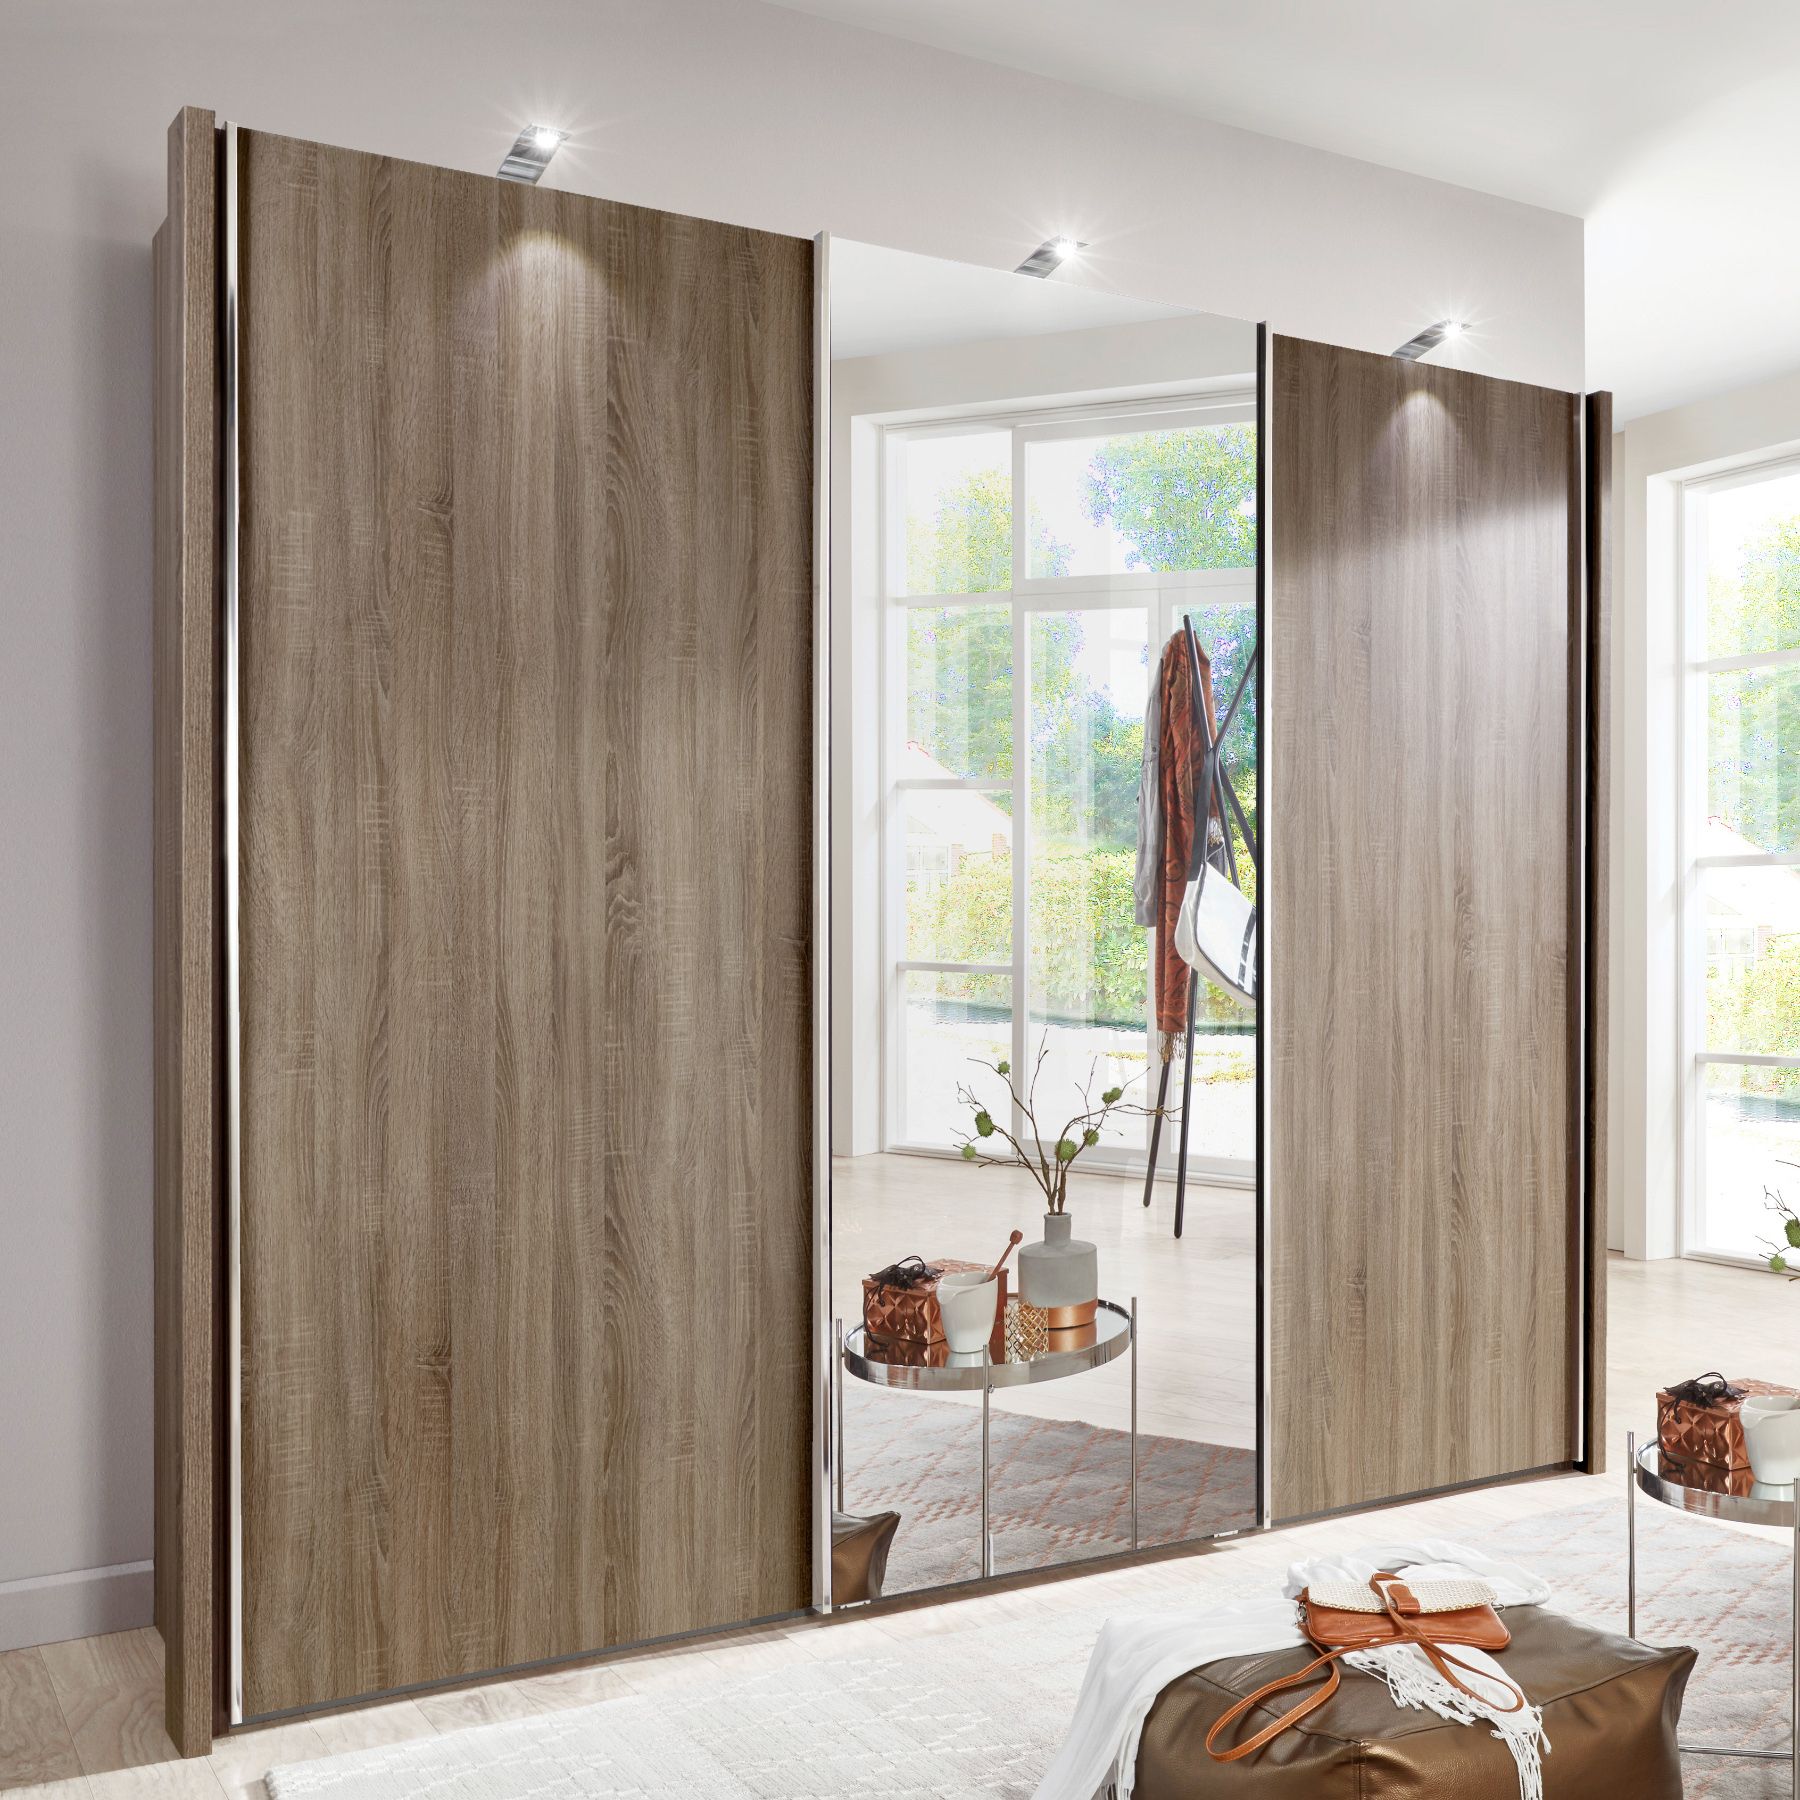 Monroe Plus – 2 Rustic Oak Doors & 1 Mirrored Door – 3 Door Sliding Wardrobe  – Semi Fitted Wardrobes – Progressive Furnishings Intended For Oak Wardrobes For Sale (Gallery 16 of 20)